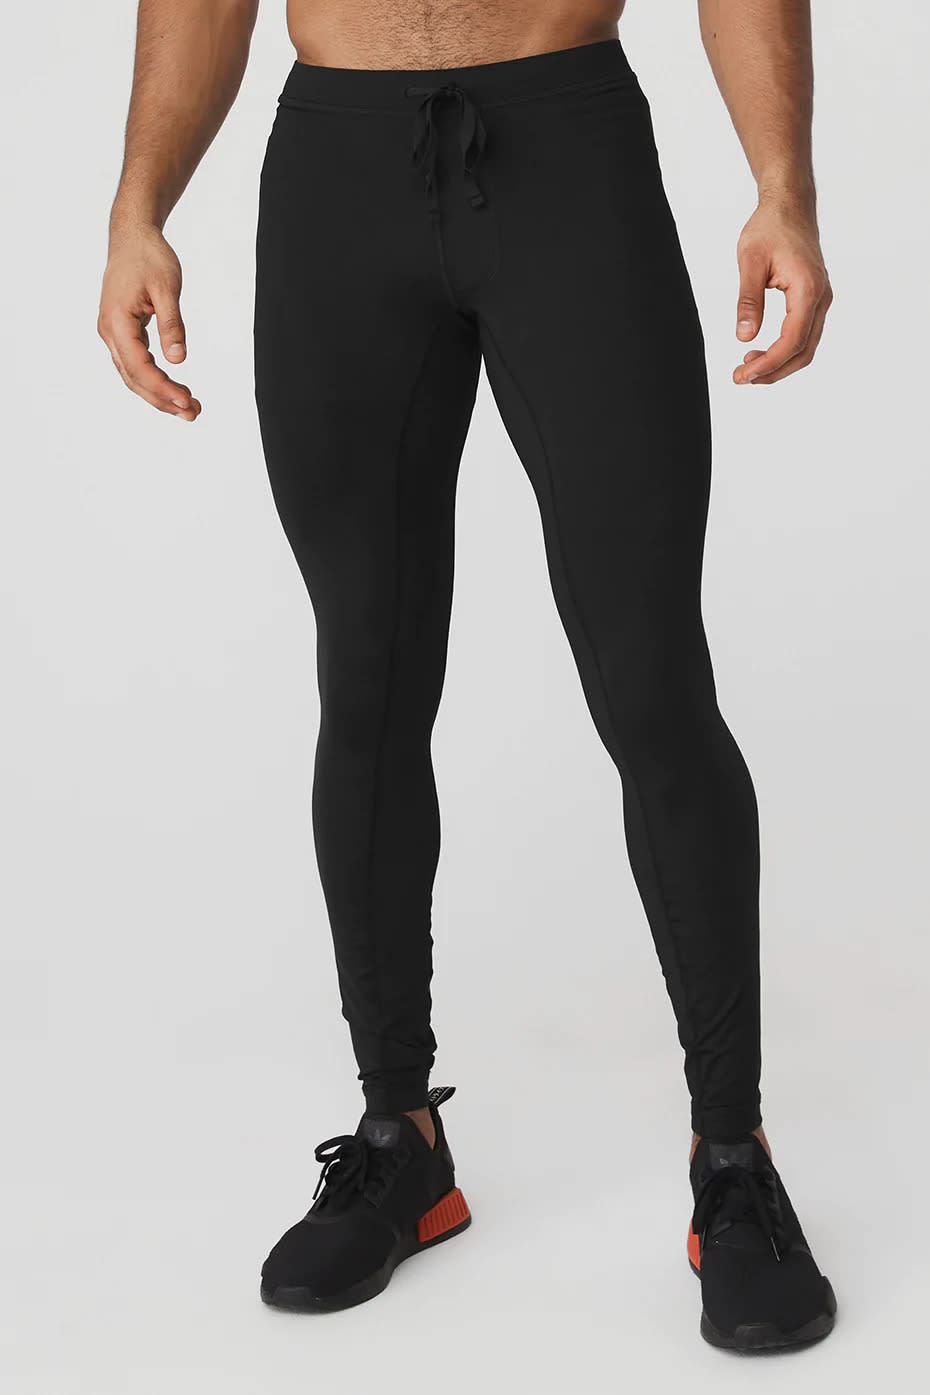 Alo Yoga Warrior Compression Pant; best compression pants for men